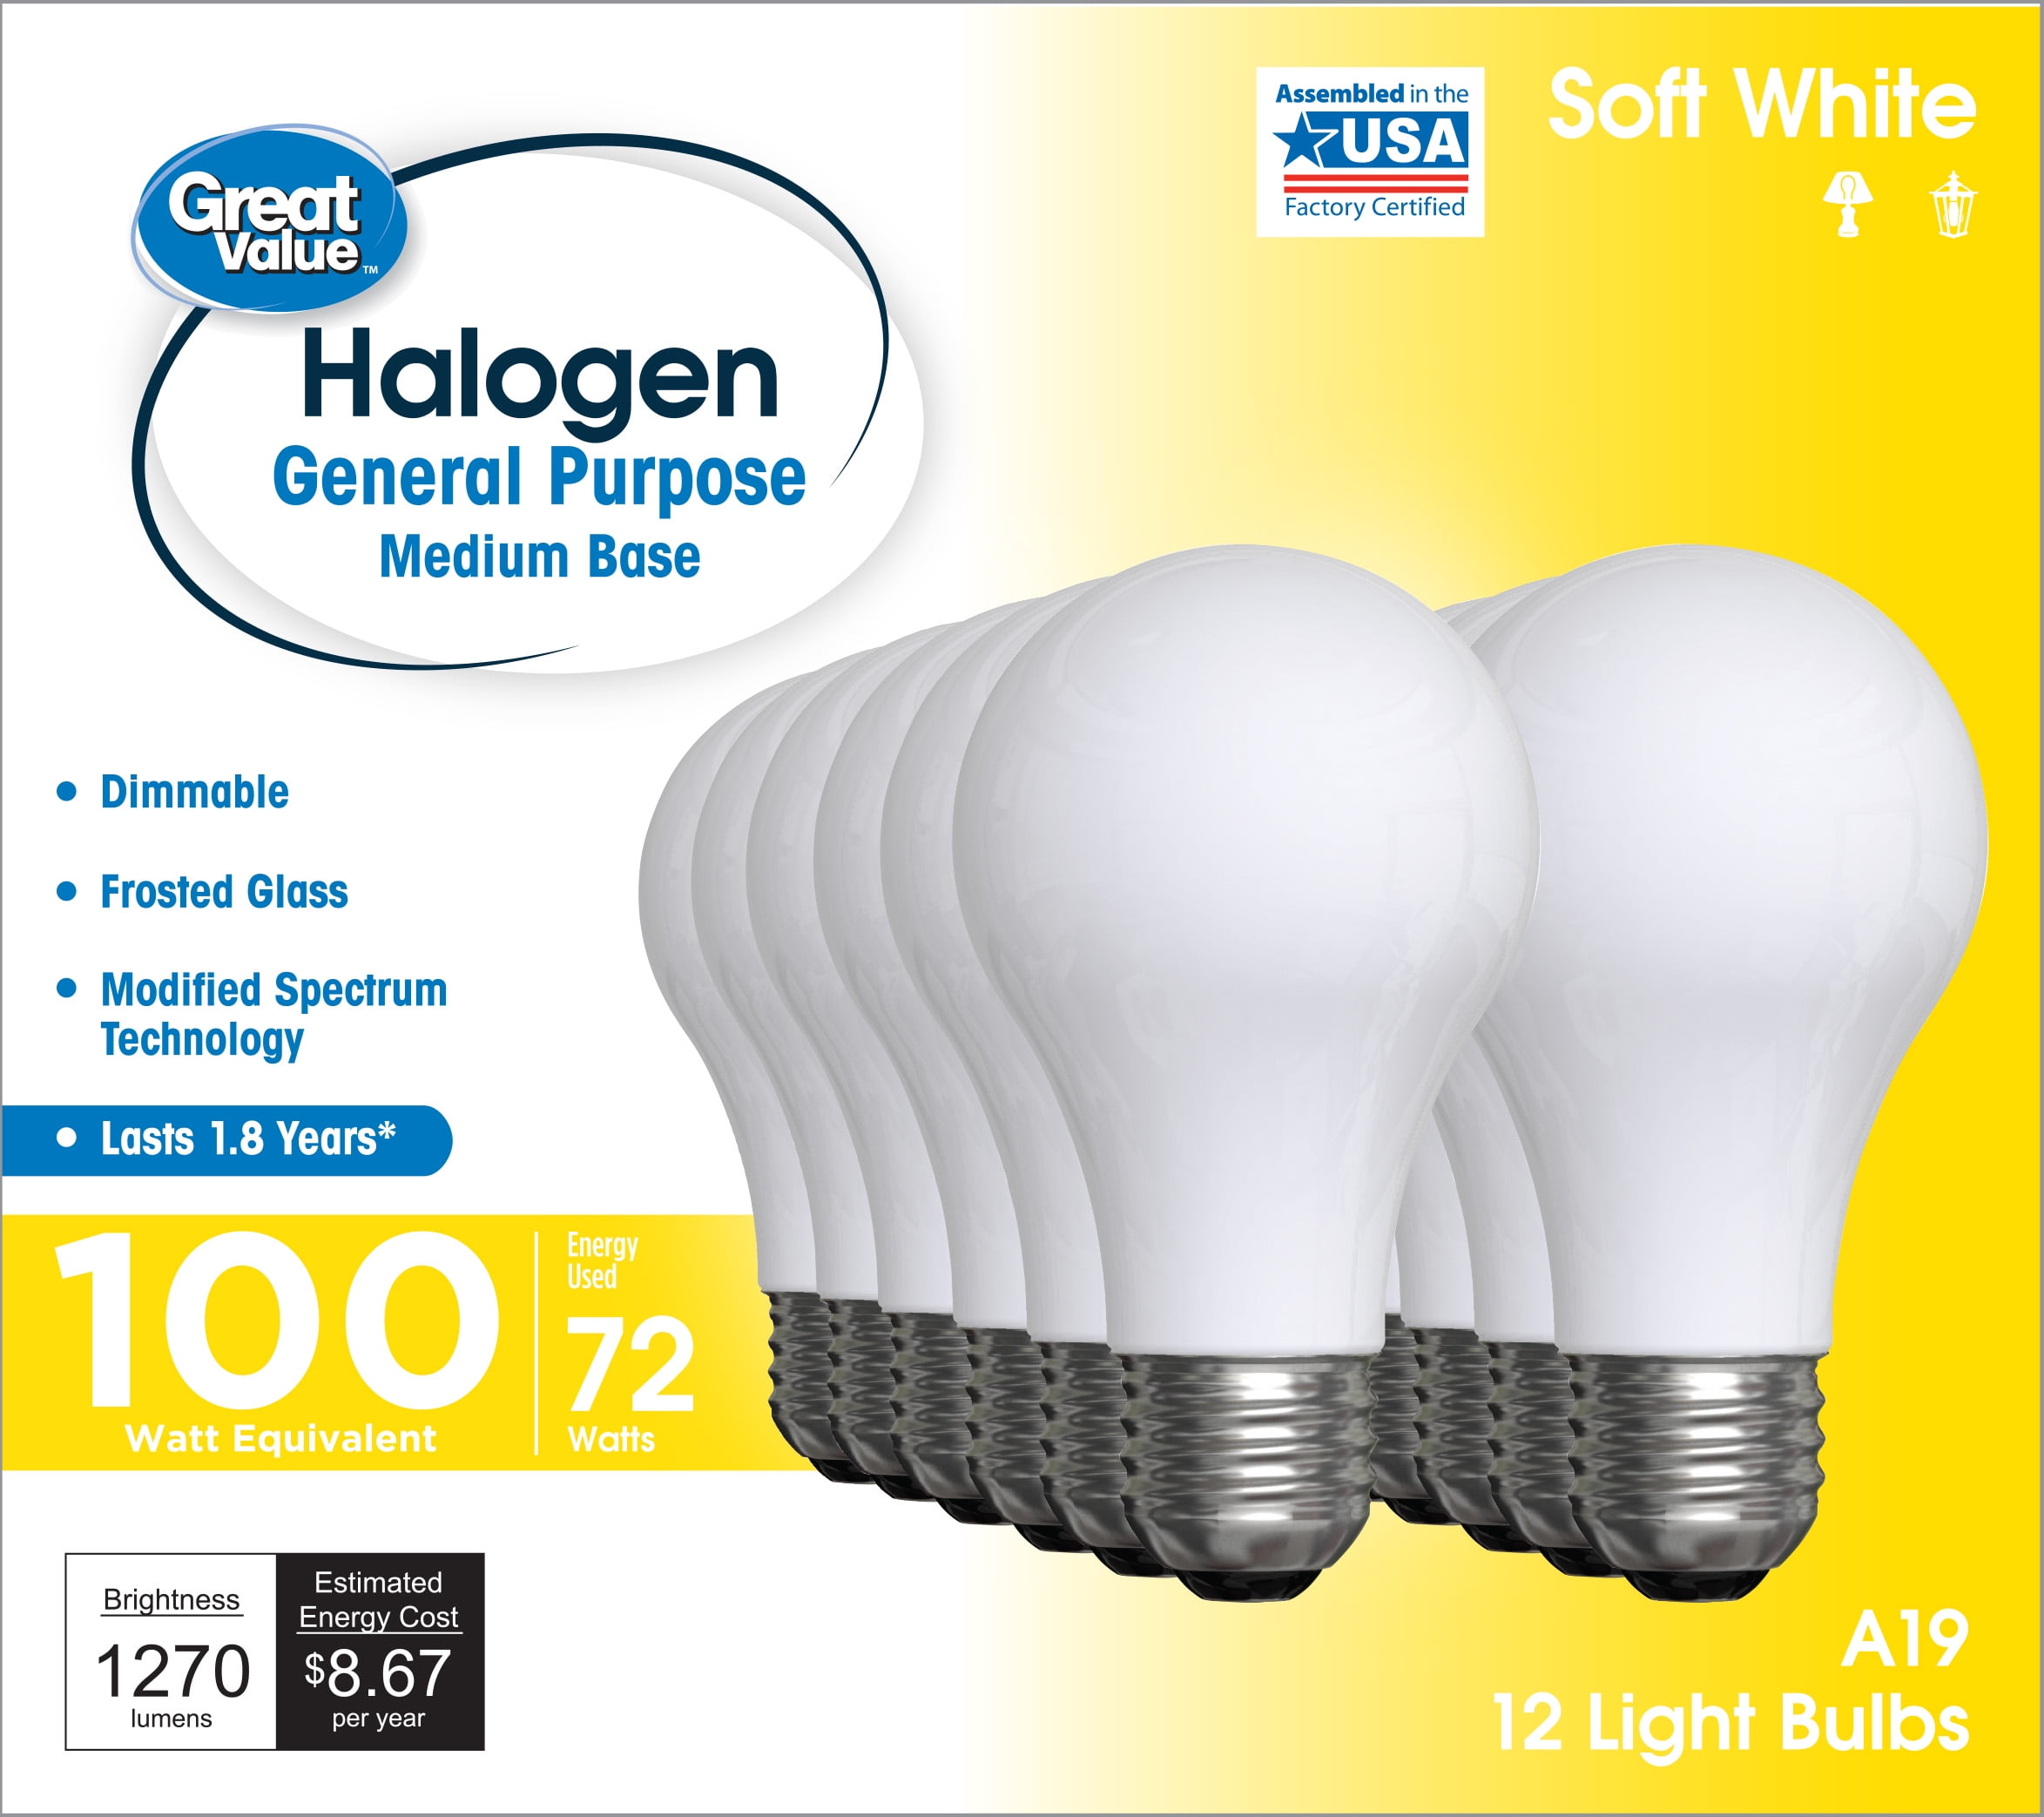 Great Value Halogen Light Bulbs, 100 Watt, Soft White, A19 General Purpose, 12pk